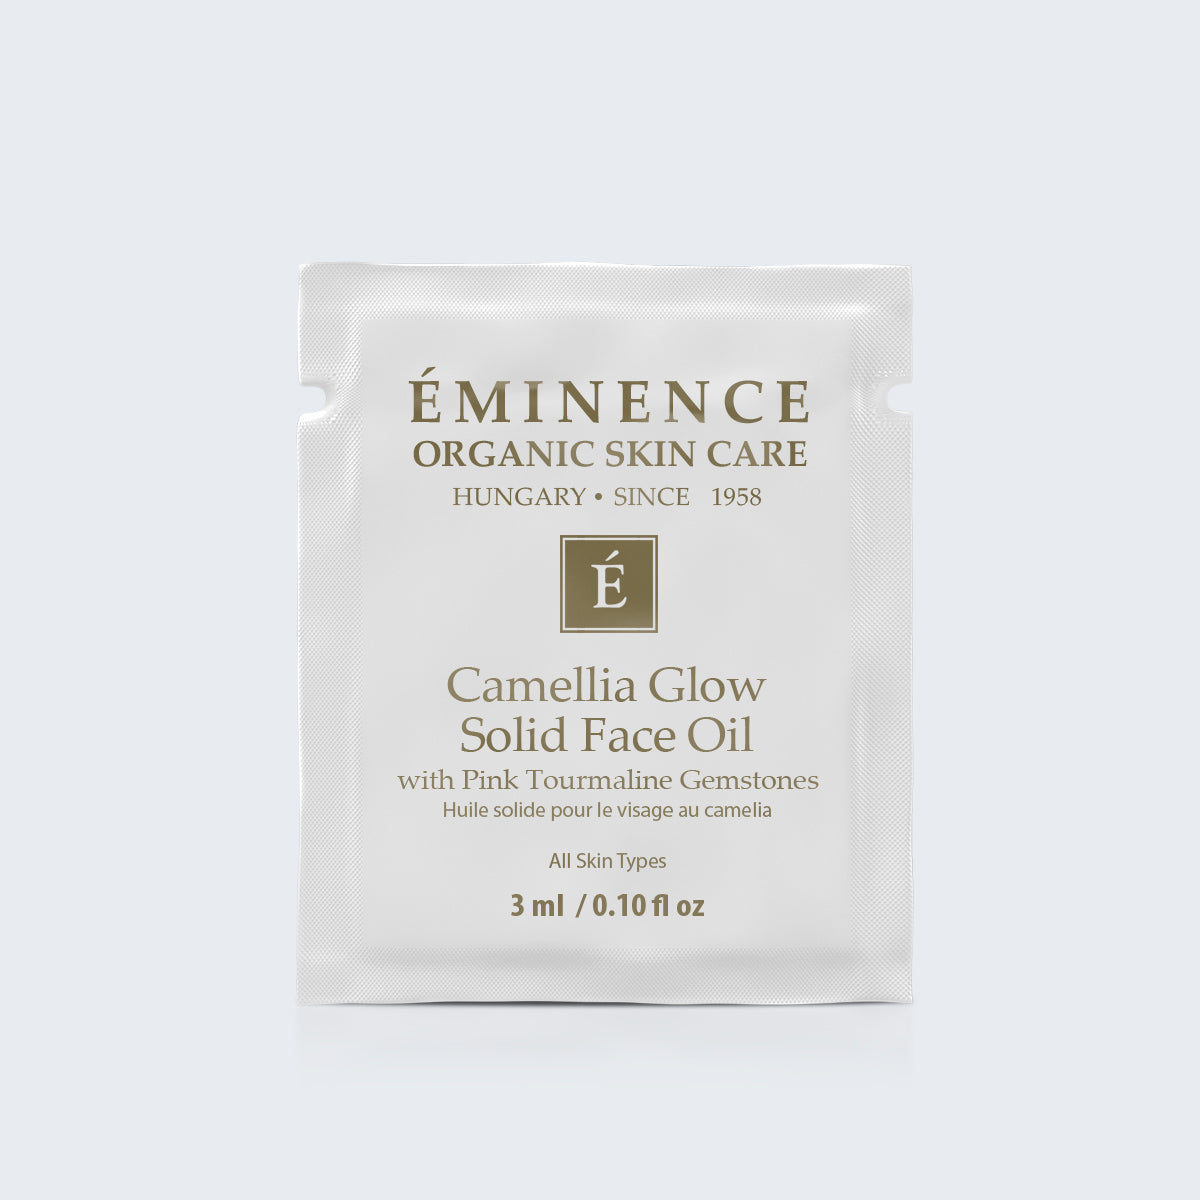 Eminence Organics Camellia Glow Solid Face Oil Sample